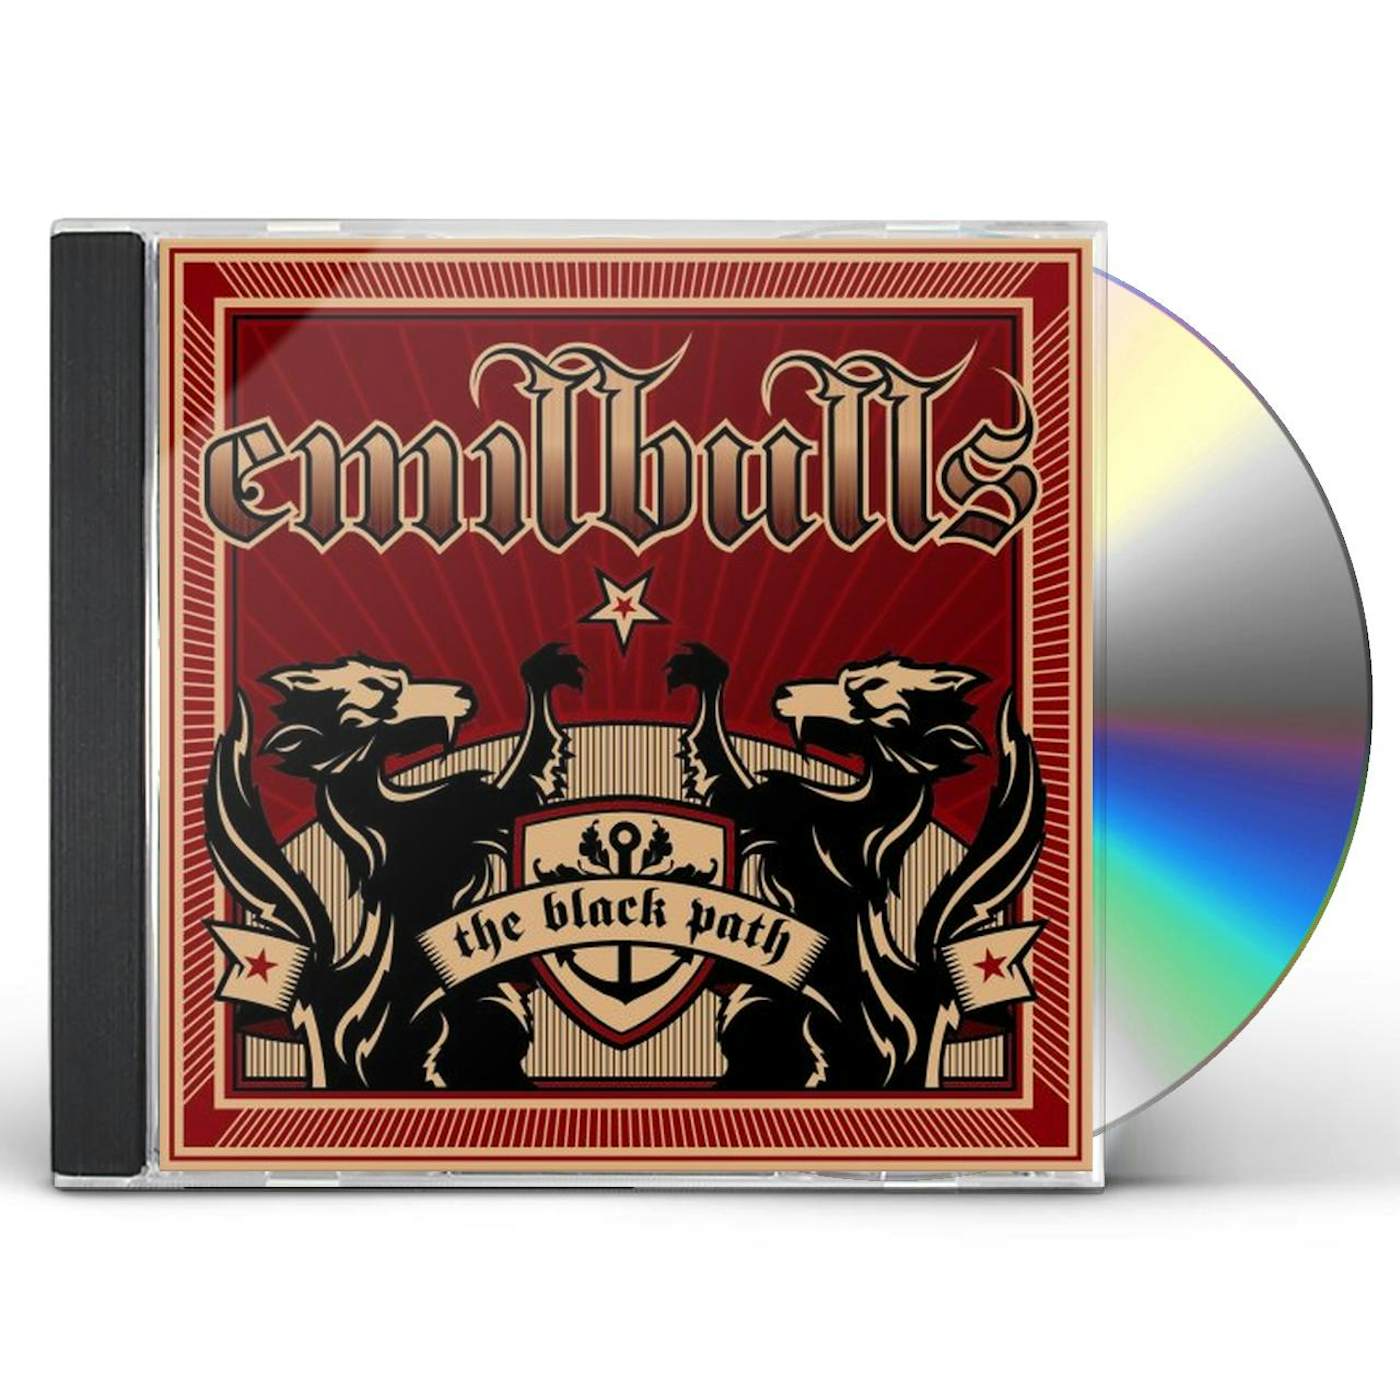 Emil Bulls BLACK PATH CD